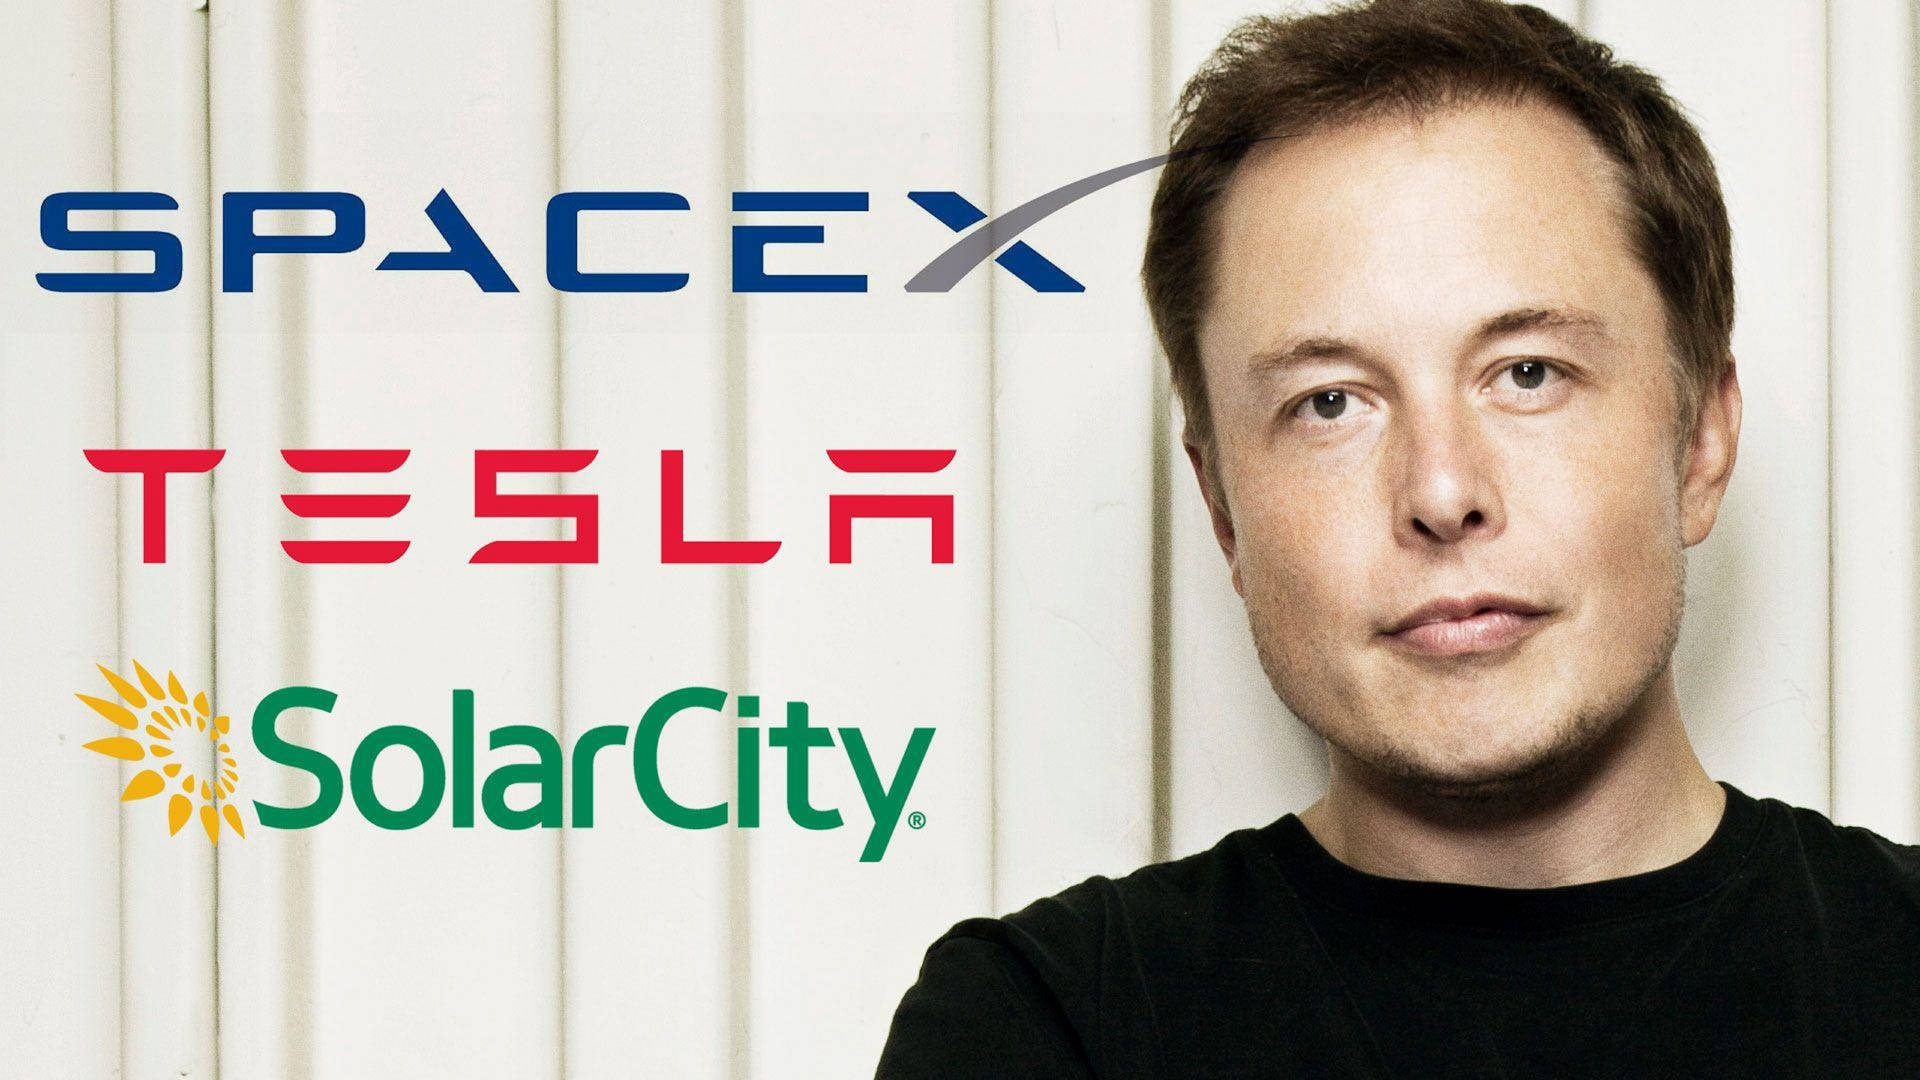 Elon Musk Ceo Spacex Tesla Solarcity Background